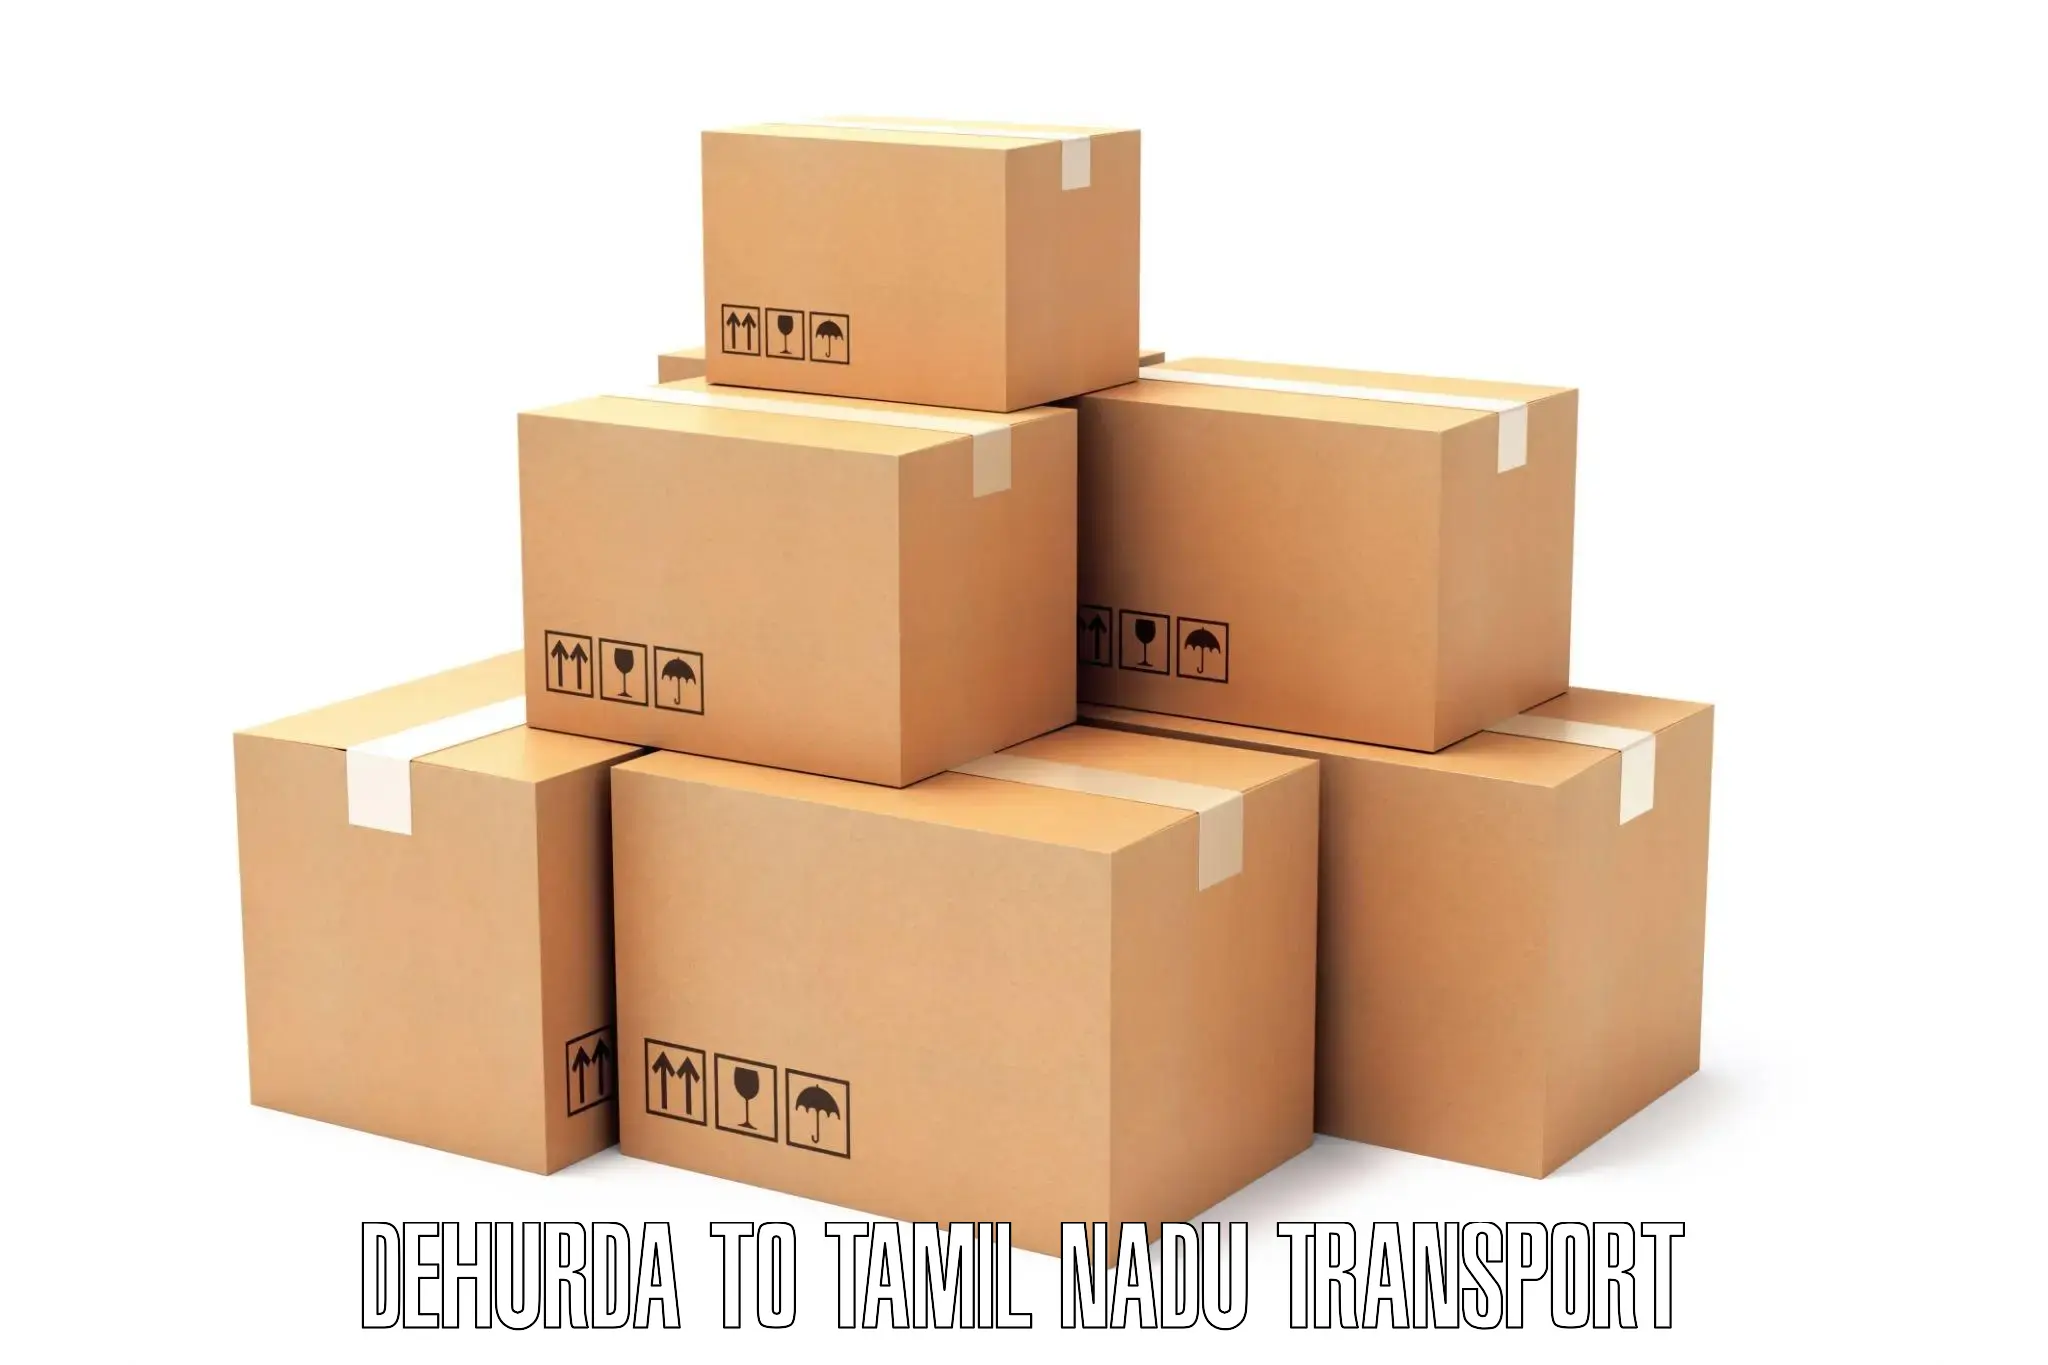 Delivery service Dehurda to Tamil Nadu